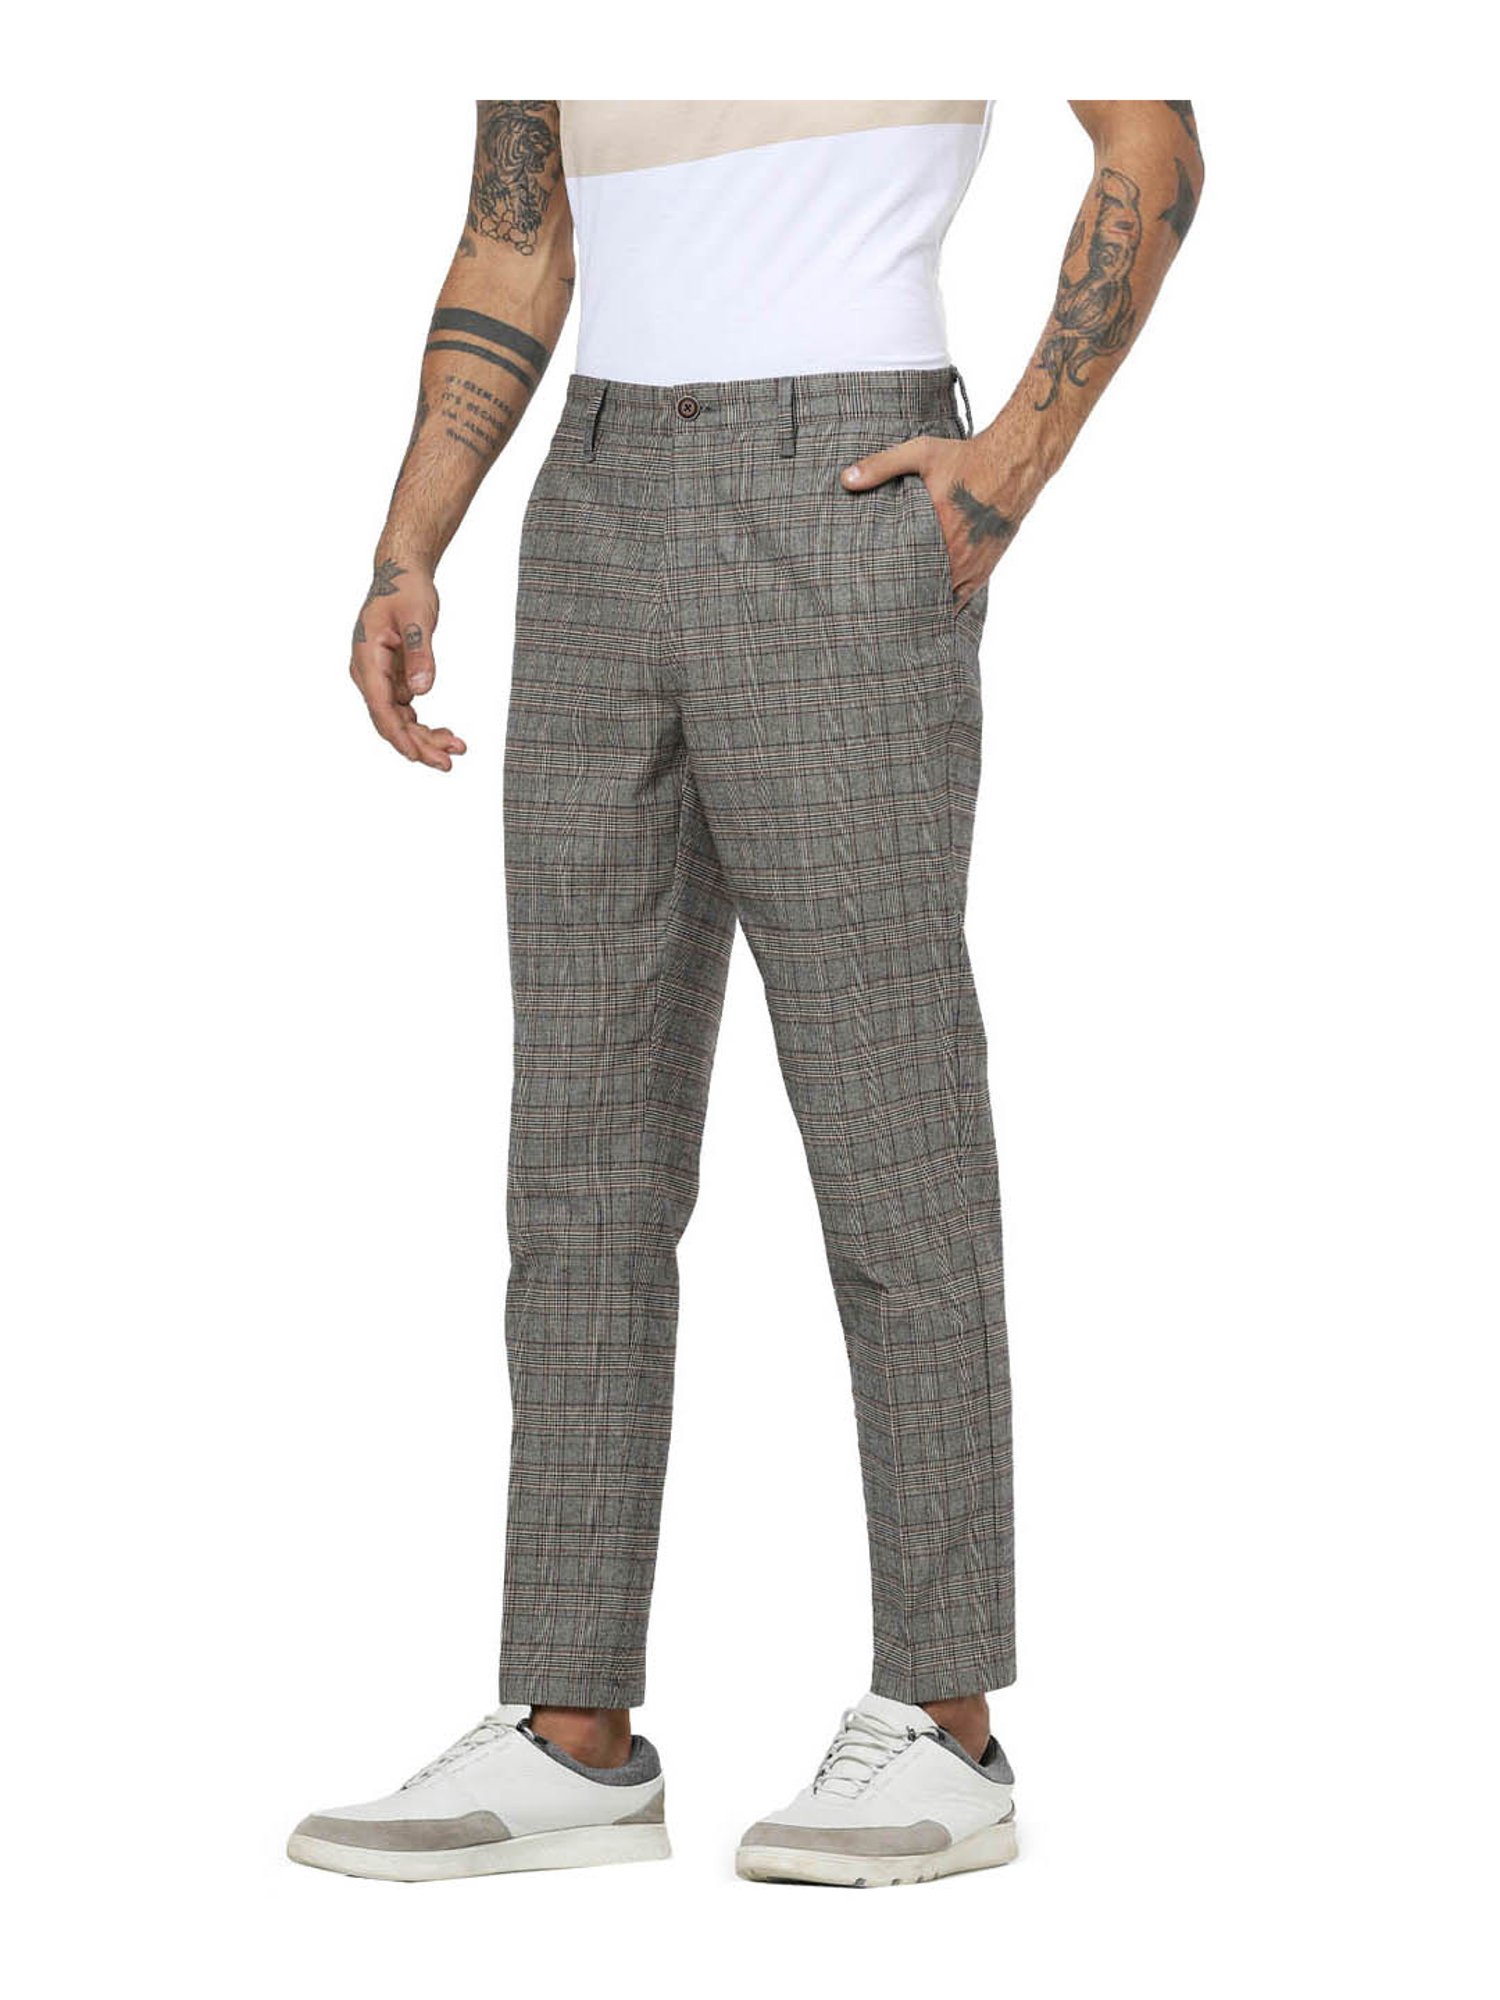 Jack  Jones Casual Trousers  Buy Jack  Jones Blue amp Pink Check Pants  OnlineNykaa fashion